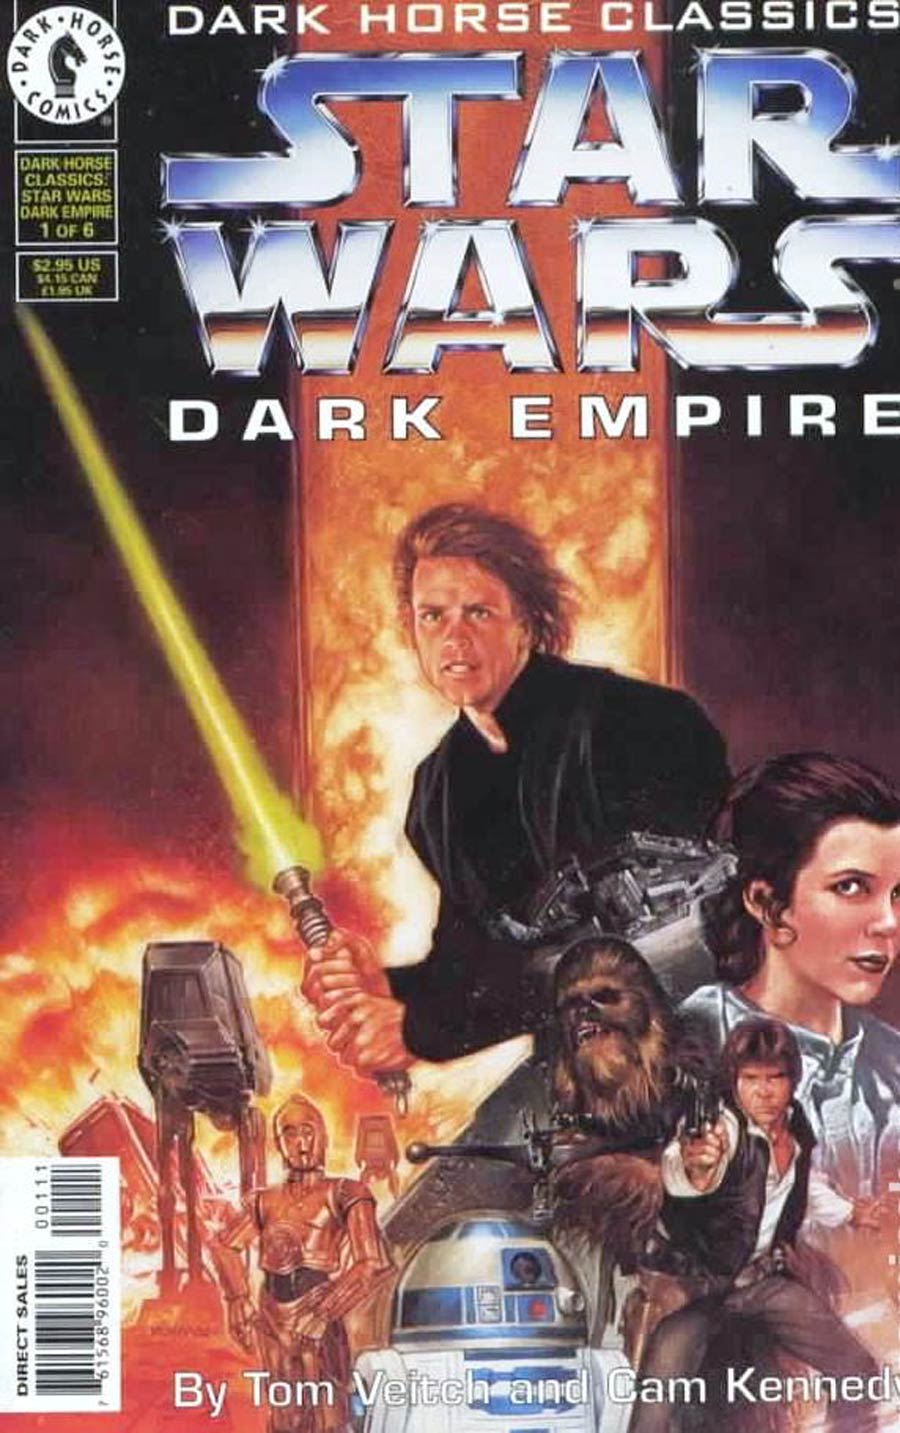 Dark Horse Classics Star Wars Dark Empire #1